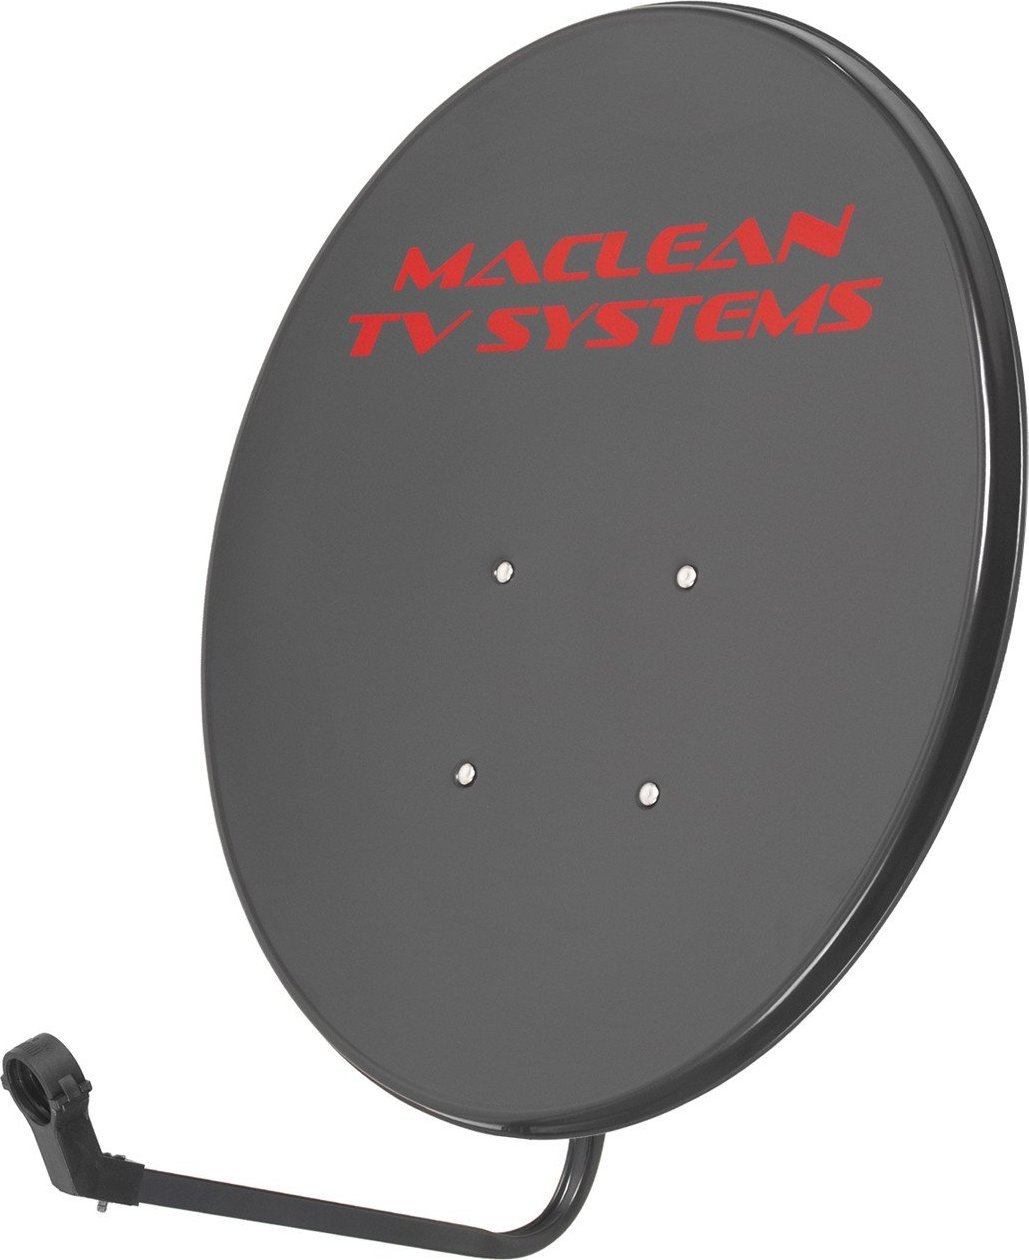 Antena satelitarna Maclean Antena satelitarna Maclean TV System, stal fosforowana, grafit, 65cm, MCTV-926 11241863 Satelītu piederumi un aksesuāri